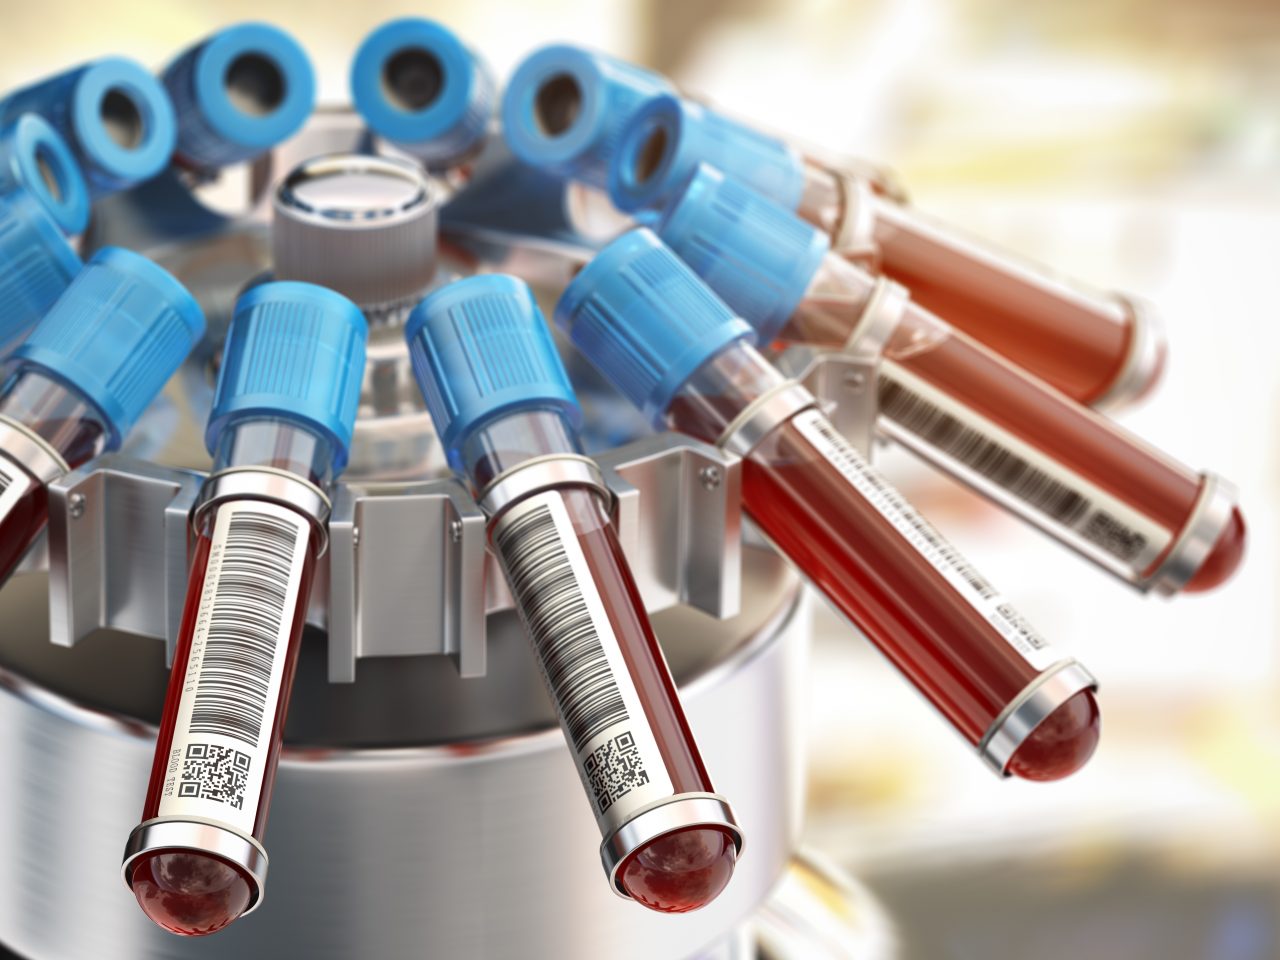 blood-test-tubes-in-centrifuge-medical-laboratory-CWURQ2F-1280x960.jpg